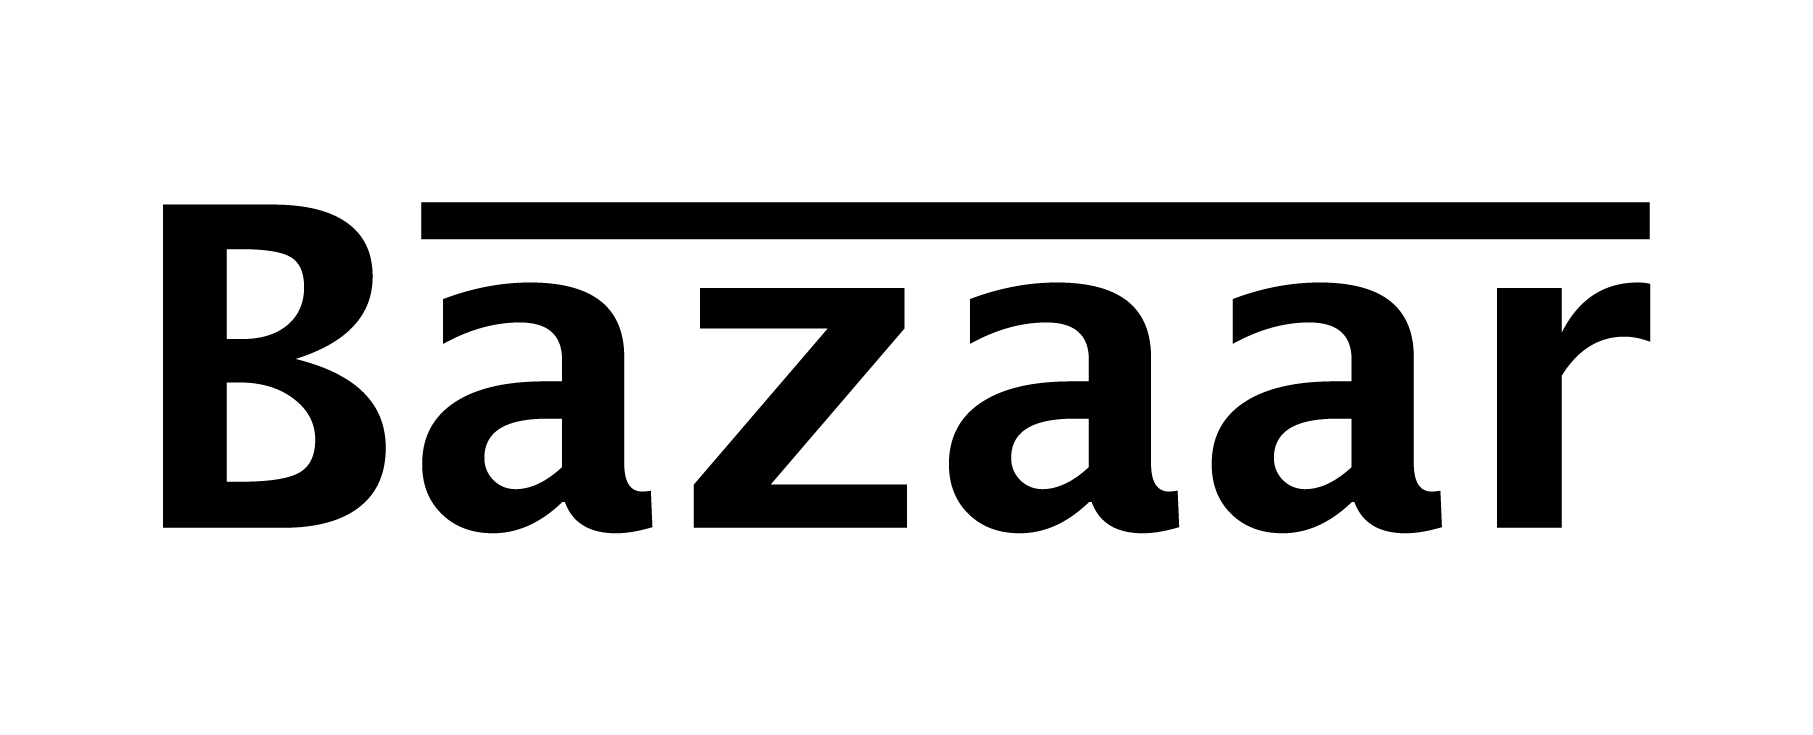 Bazaar Logo - TechDay - Access Bazaar